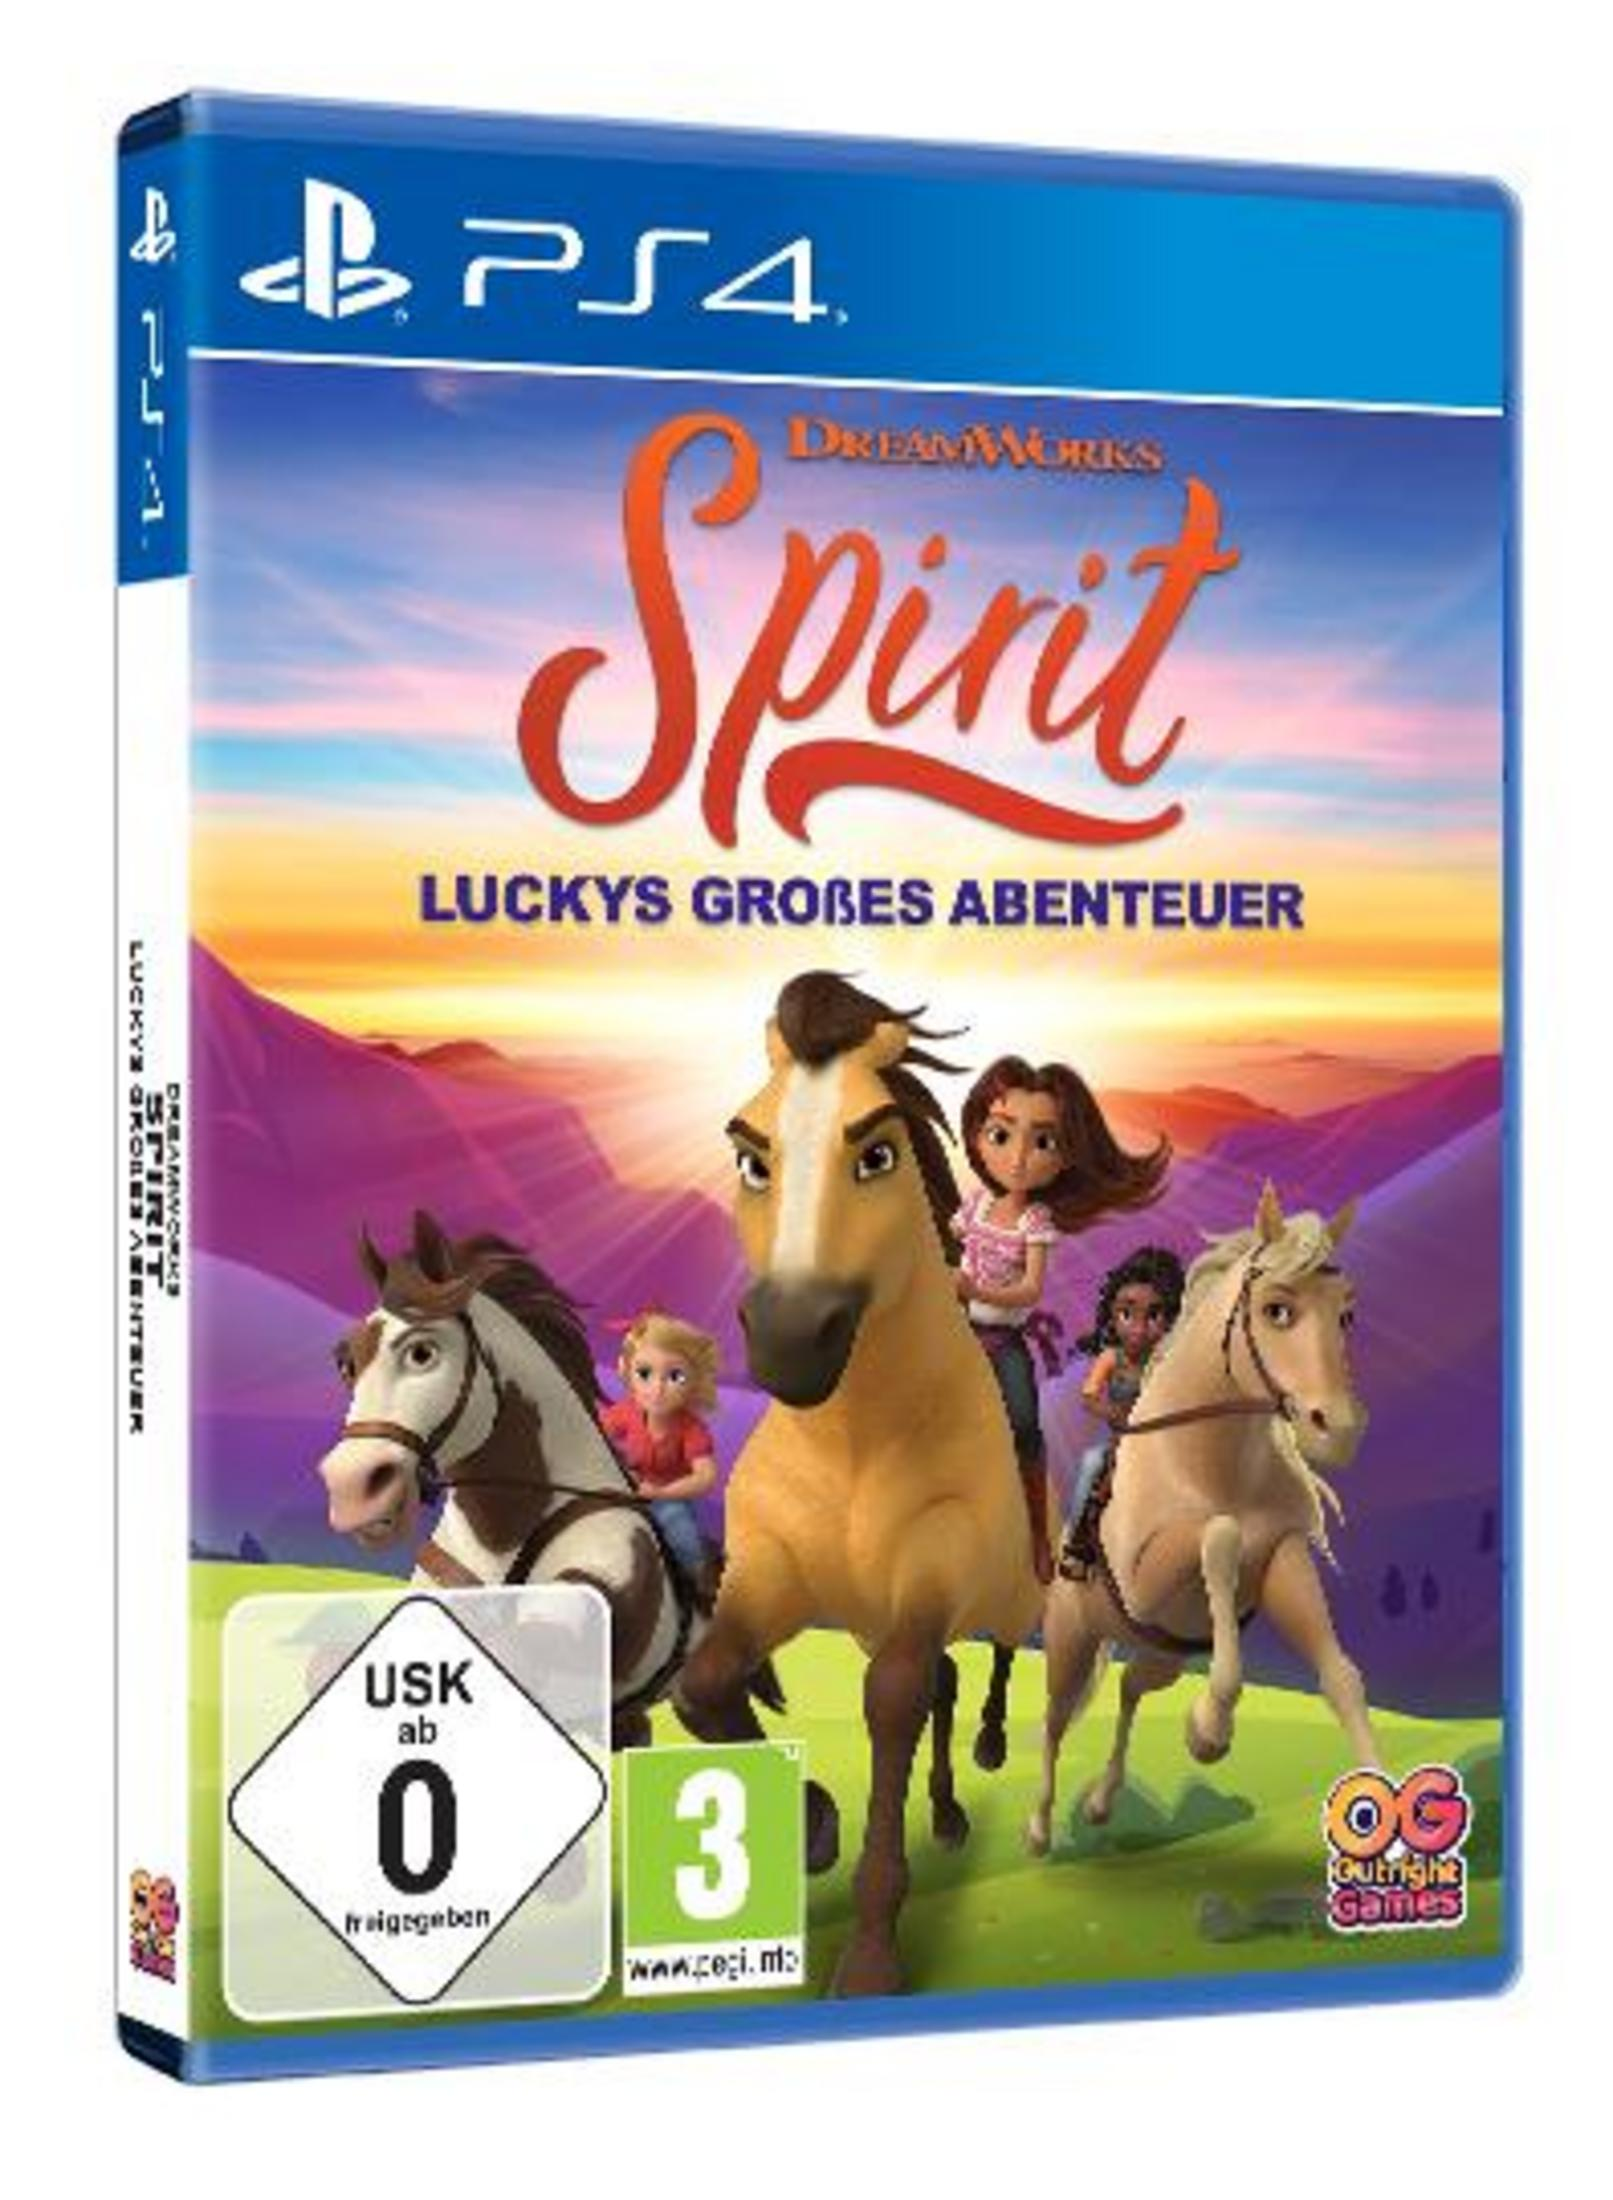 Spirit Luckys großes Abenteuer - [PlayStation 4